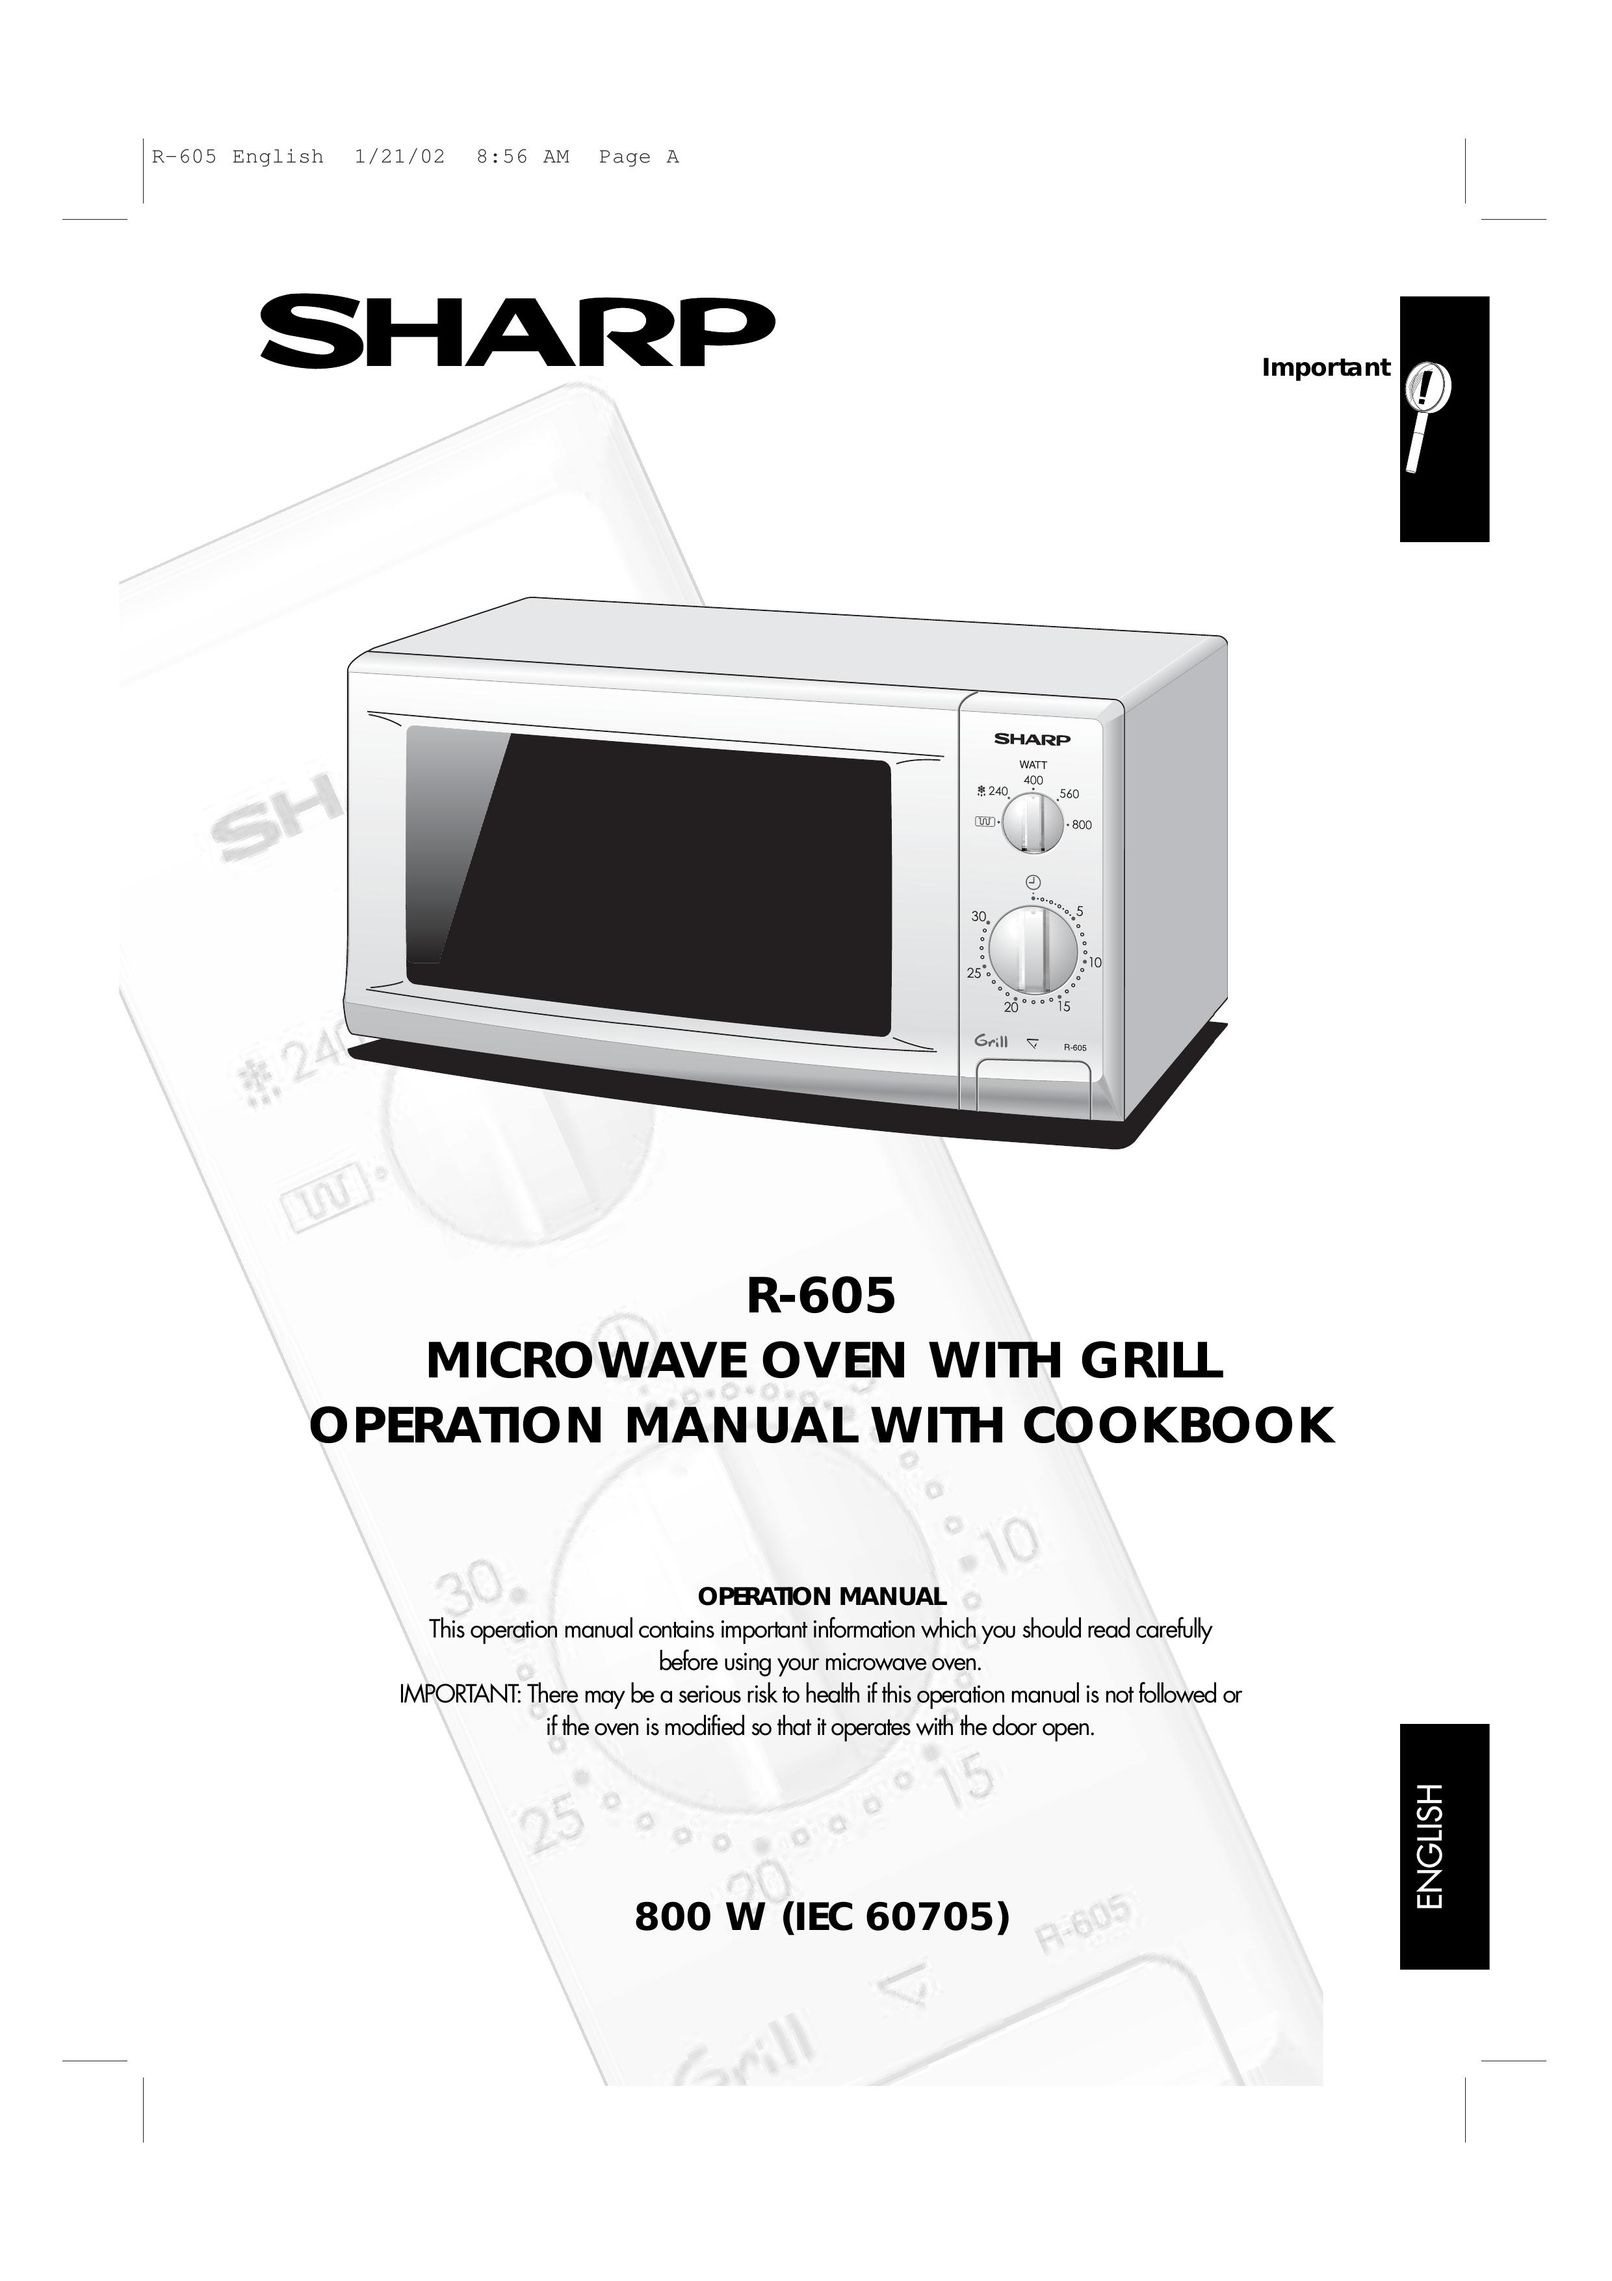 Sharp ENGLISH R-605 Microwave Oven User Manual